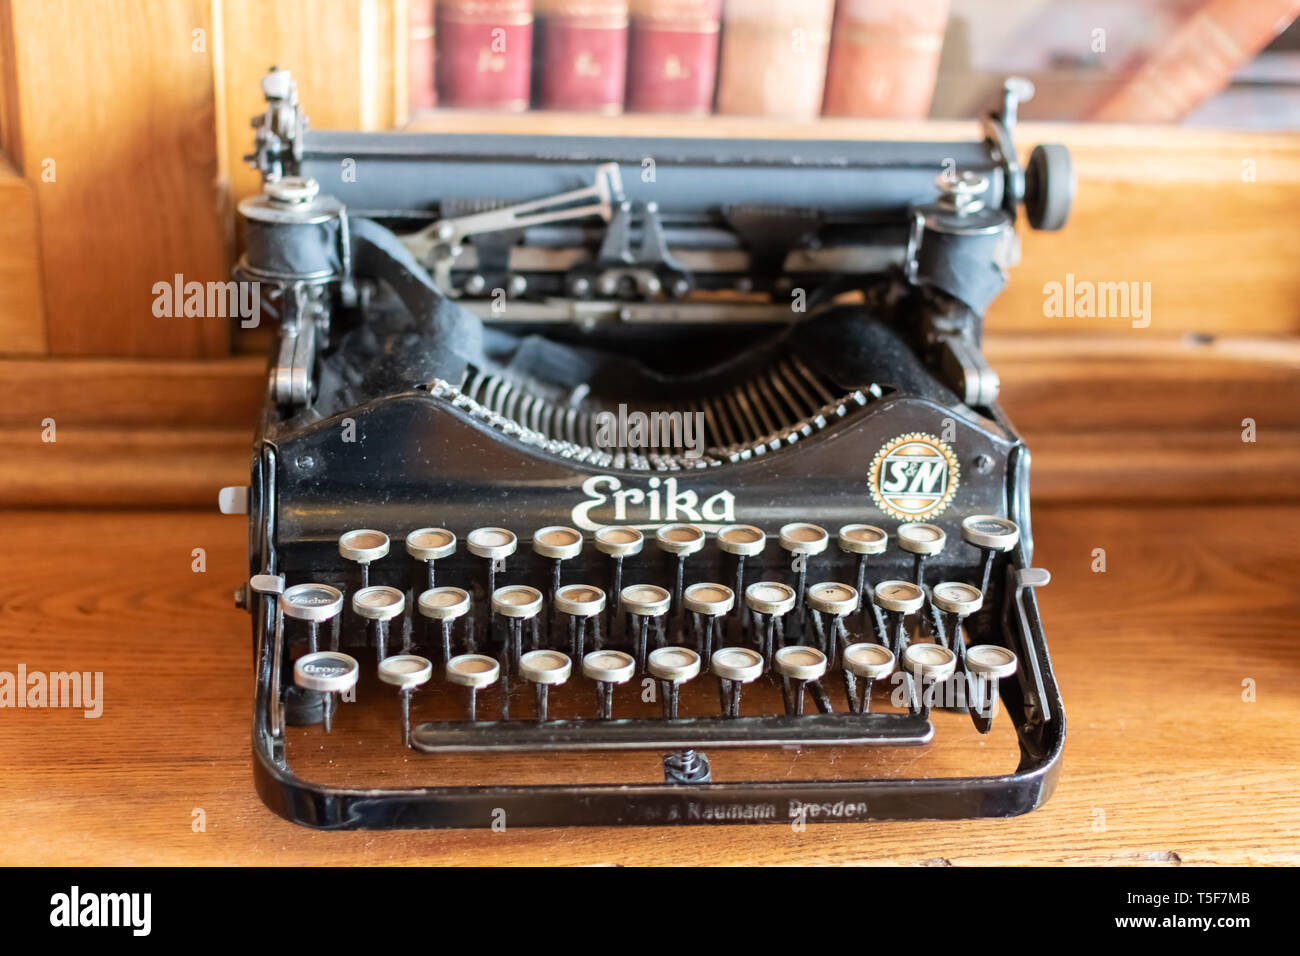 Castle Radun, Czech Republic, 7 April 2019 - Old, retro and stylish Erika typewriter at the museum Stock Photo